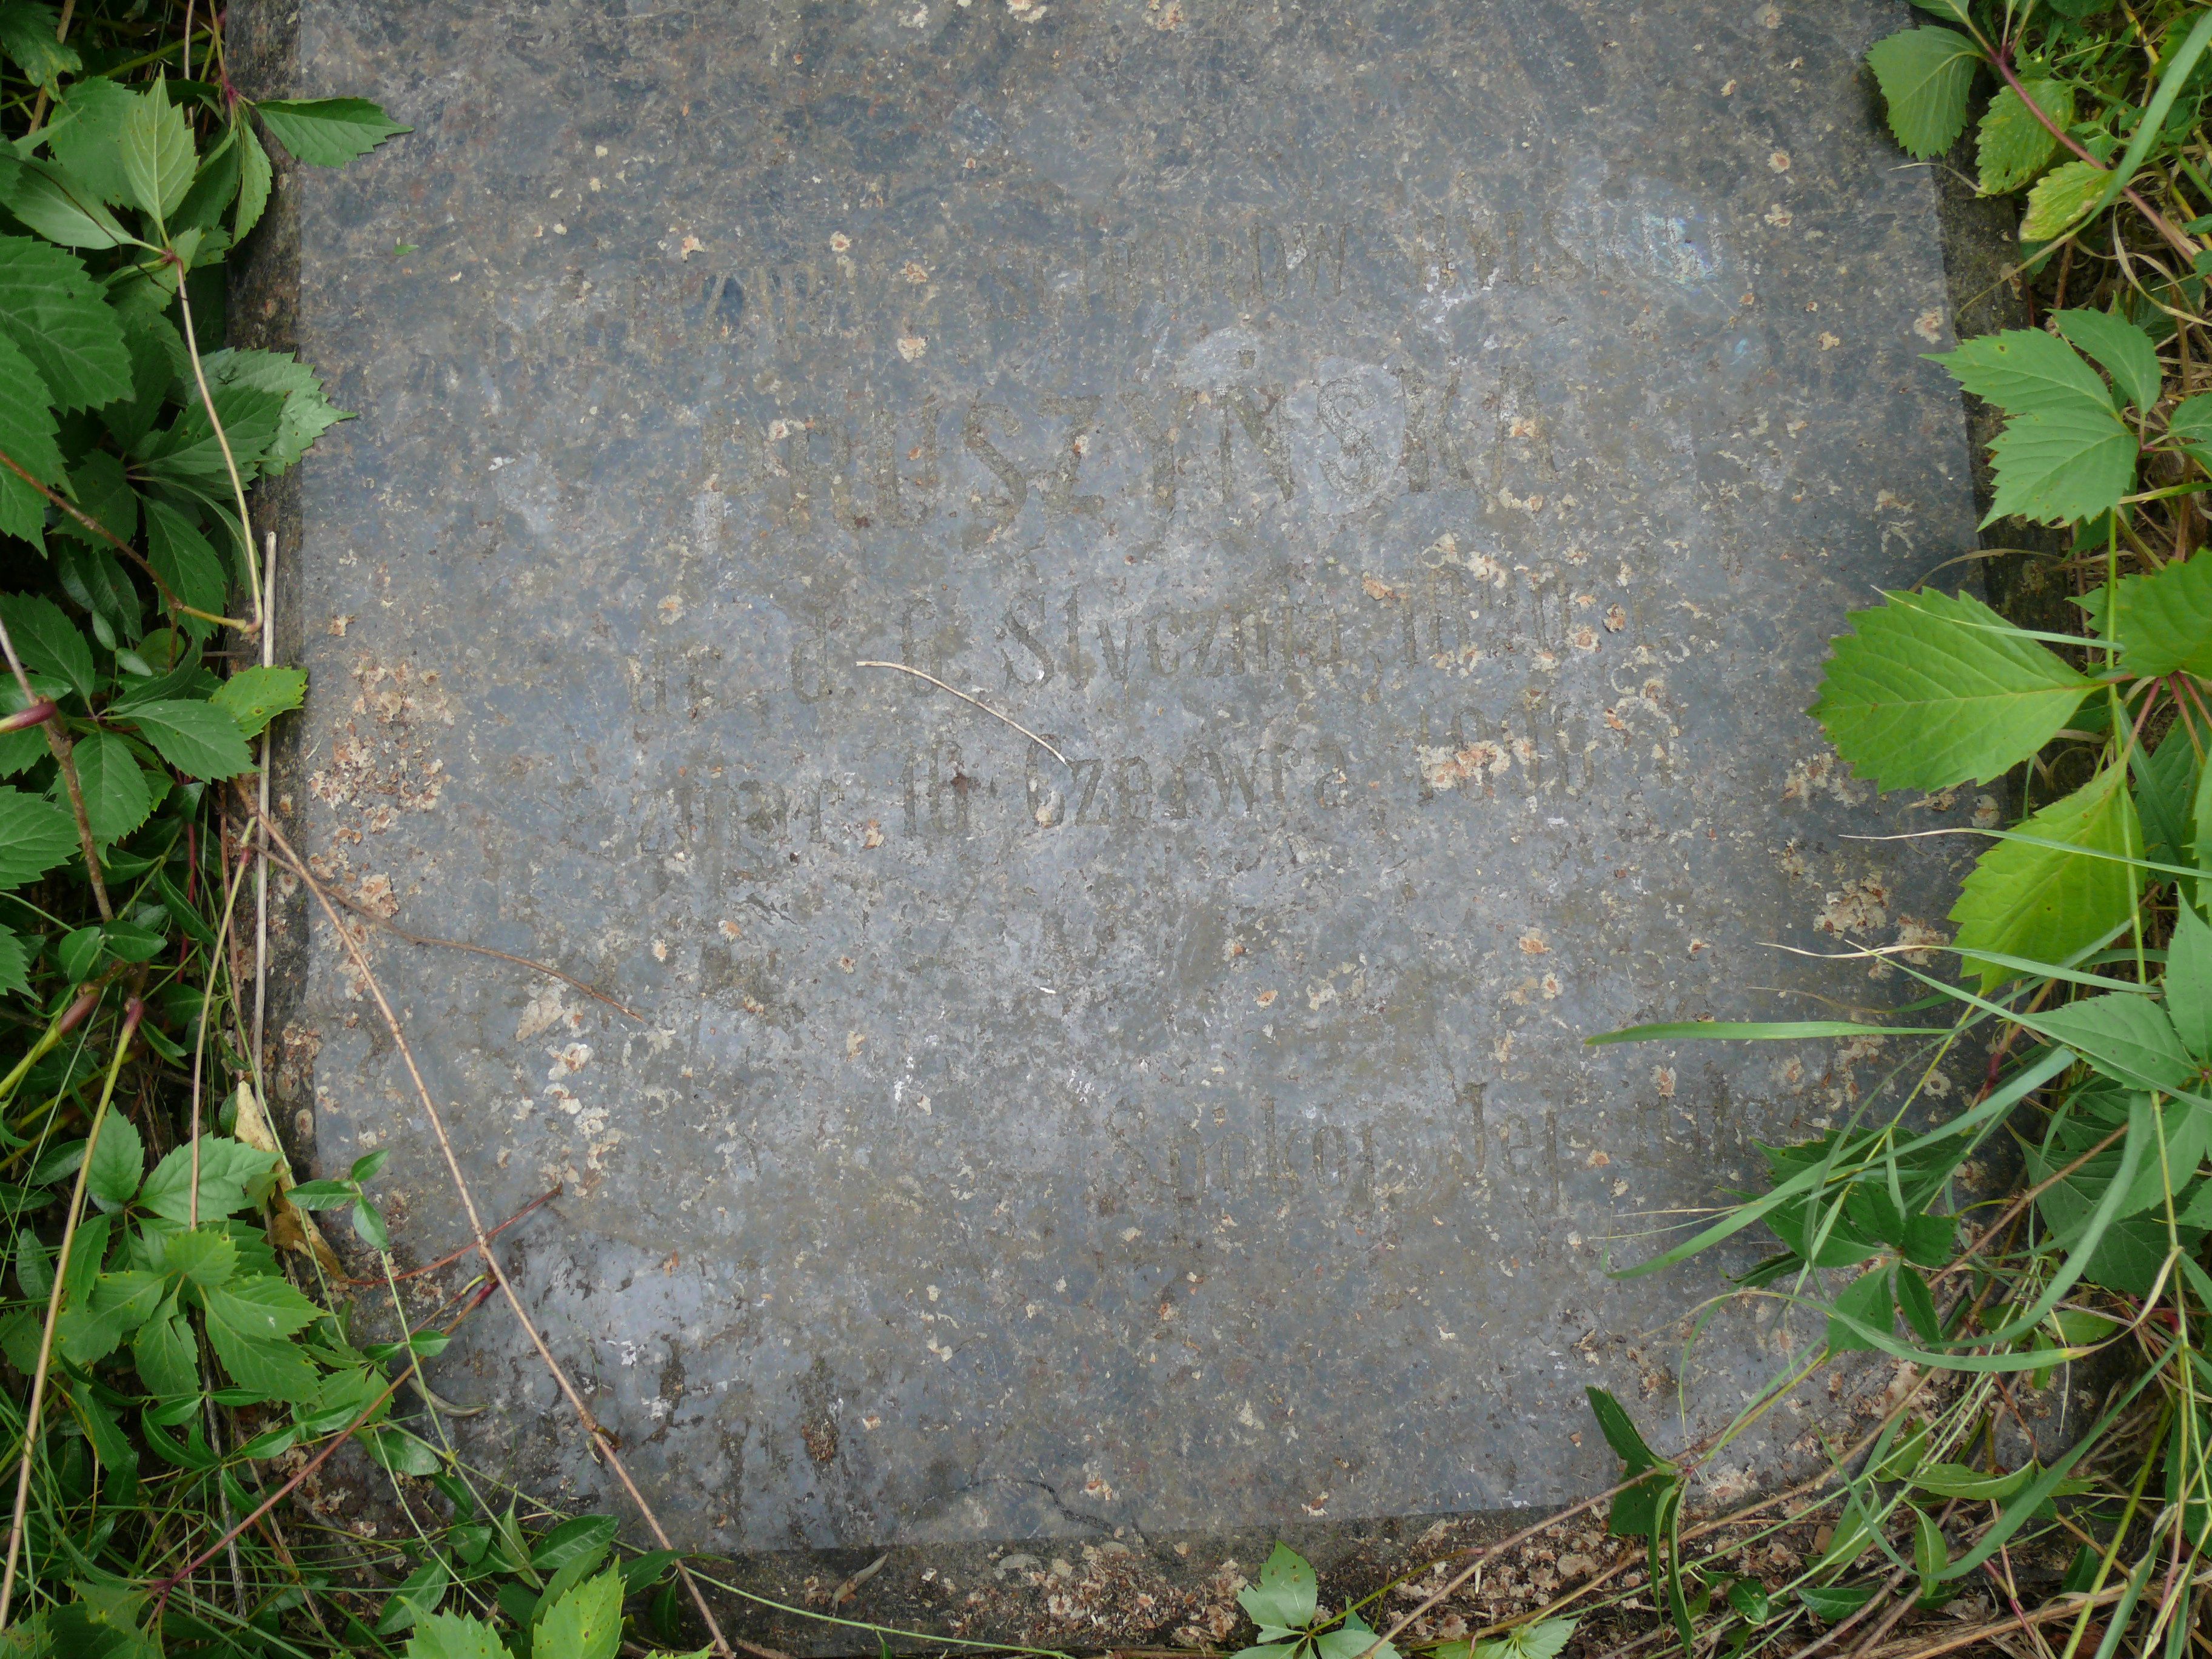 Inscription from the tombstone of Balthazara Pruszyńska